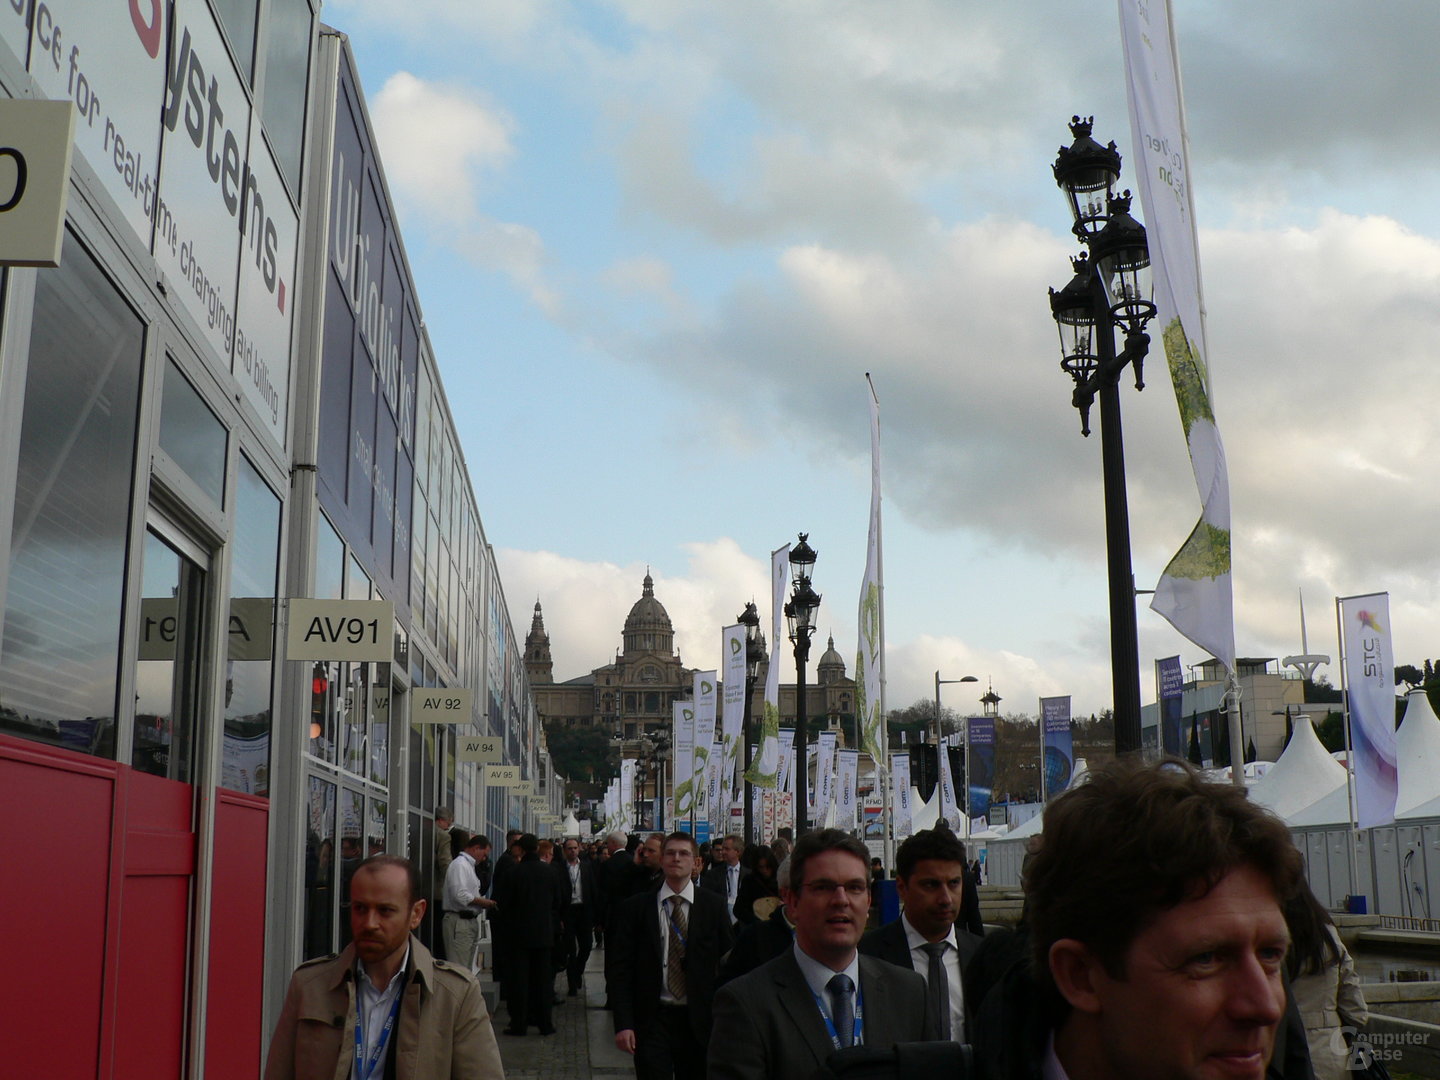 Mobile World Congress 2012